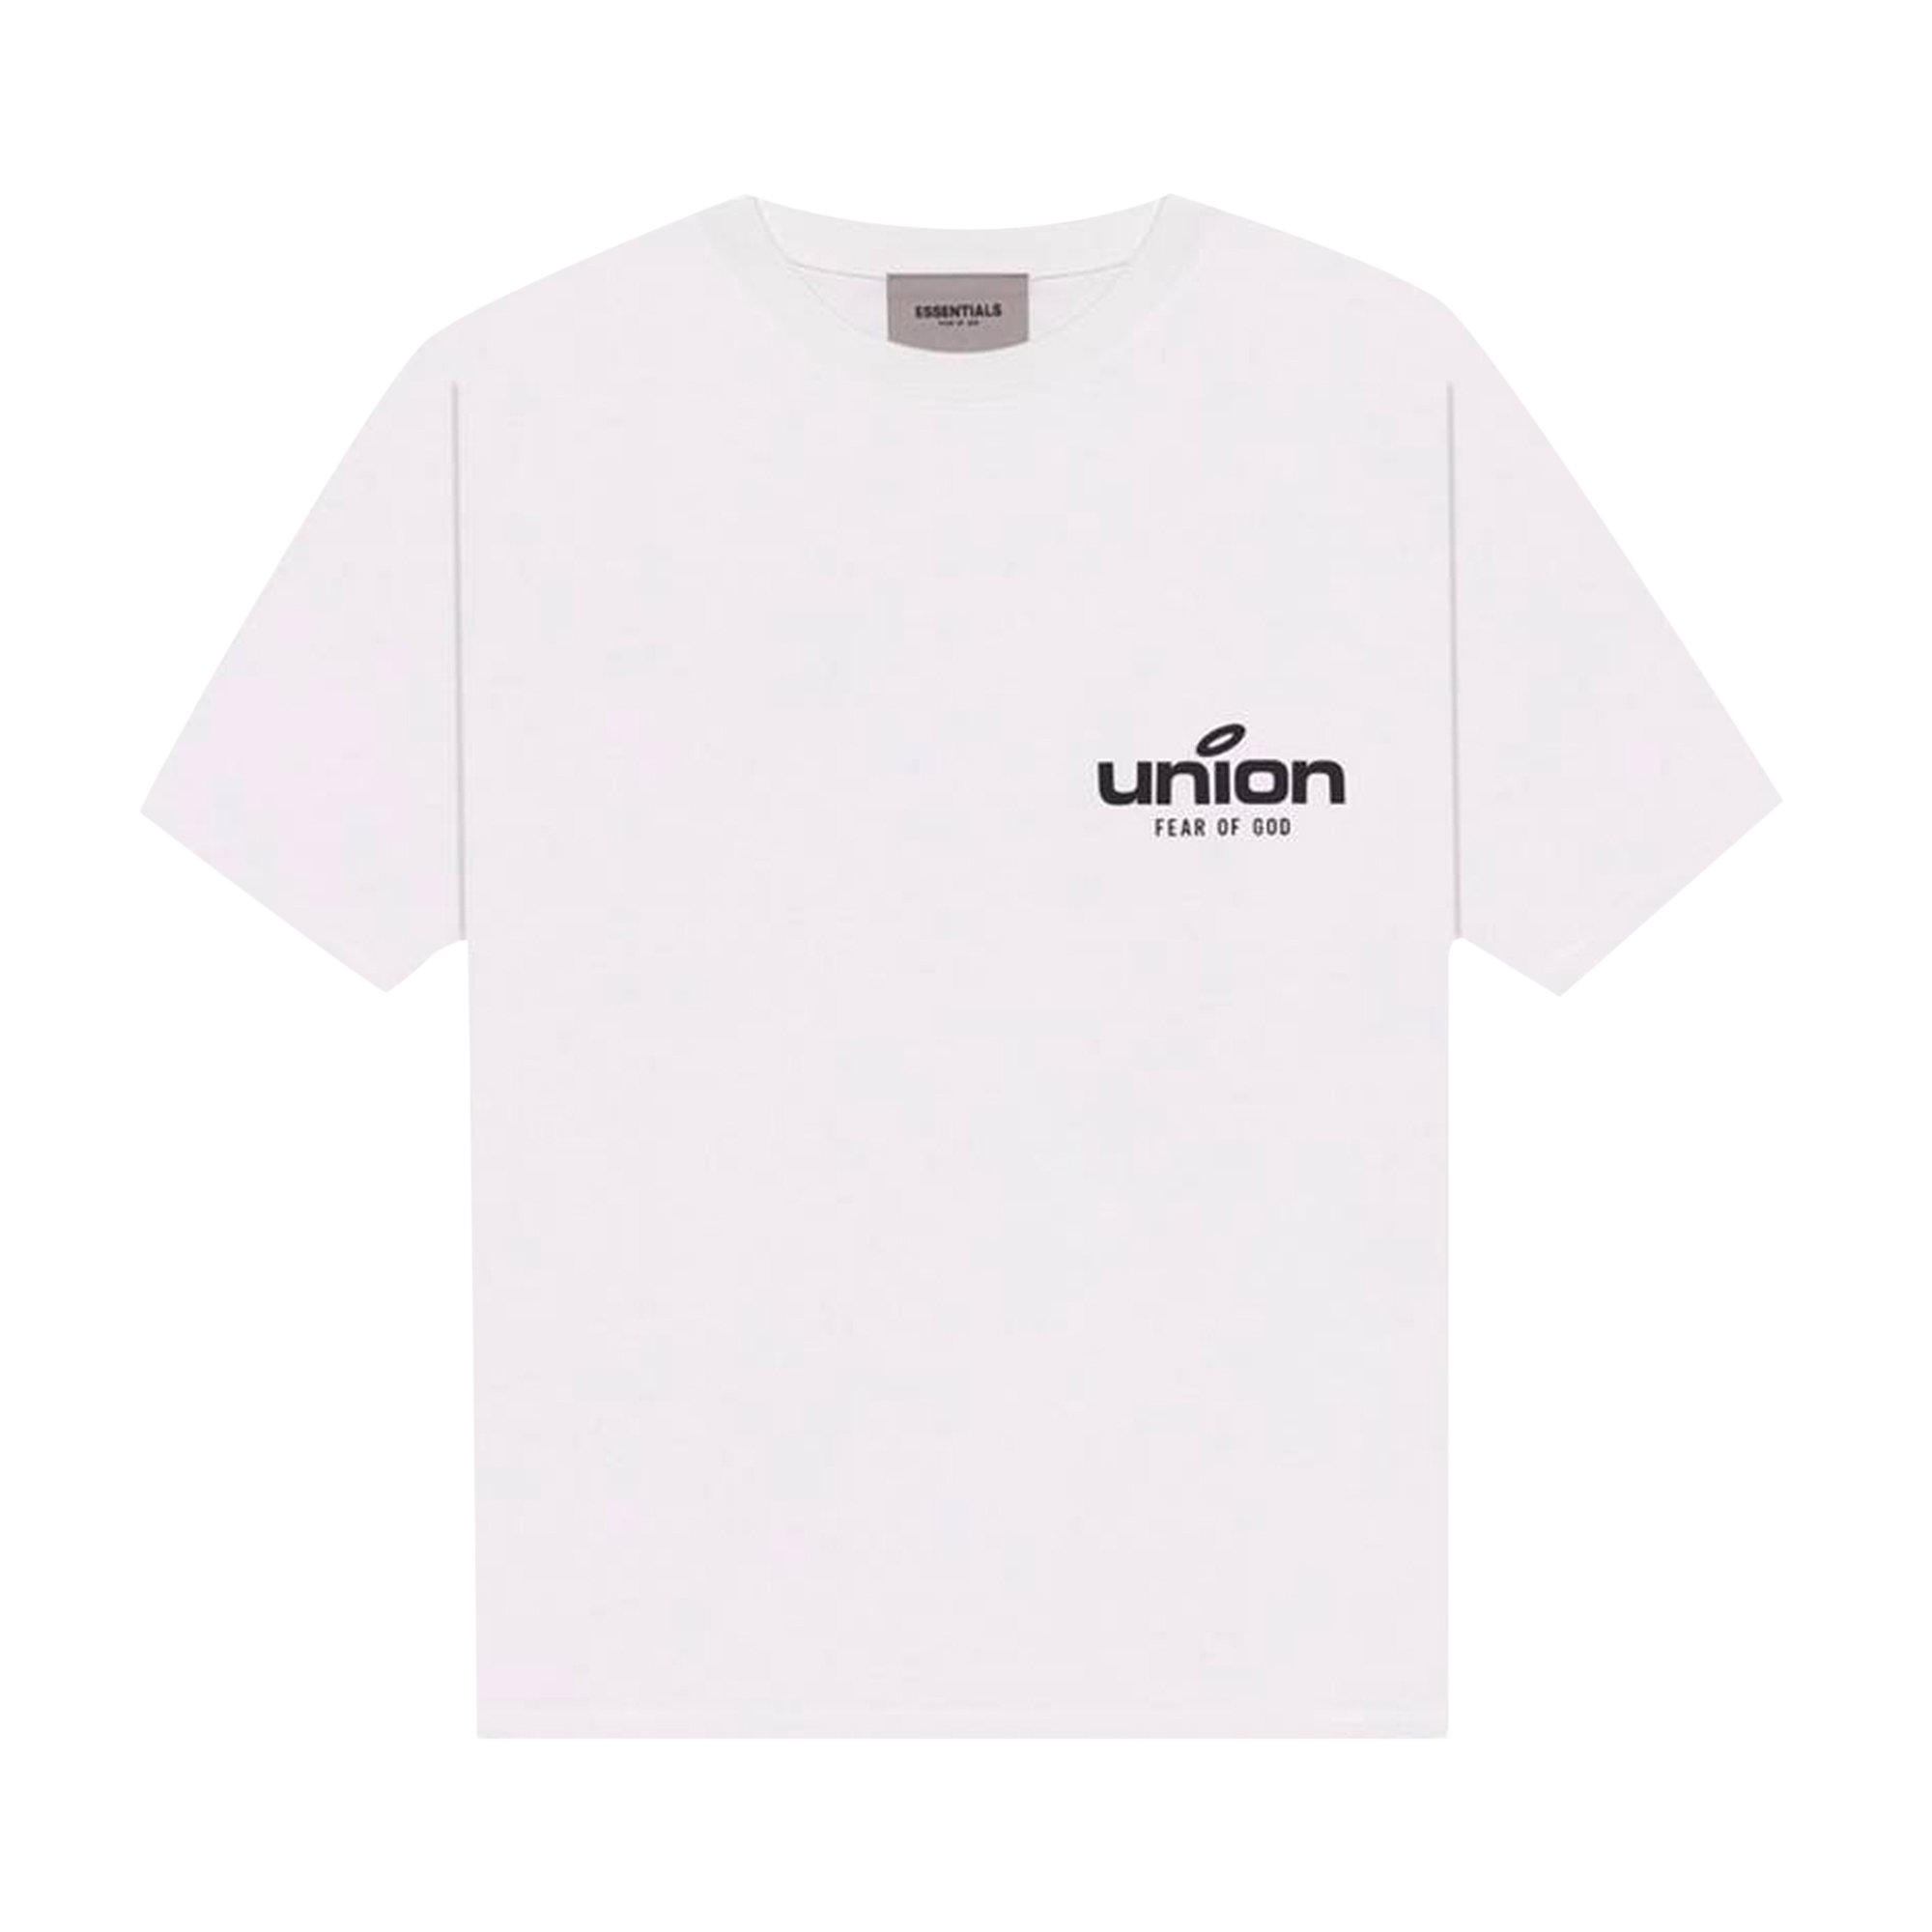 Buy Fear of God Essentials x Union Vintage Shirt 'White